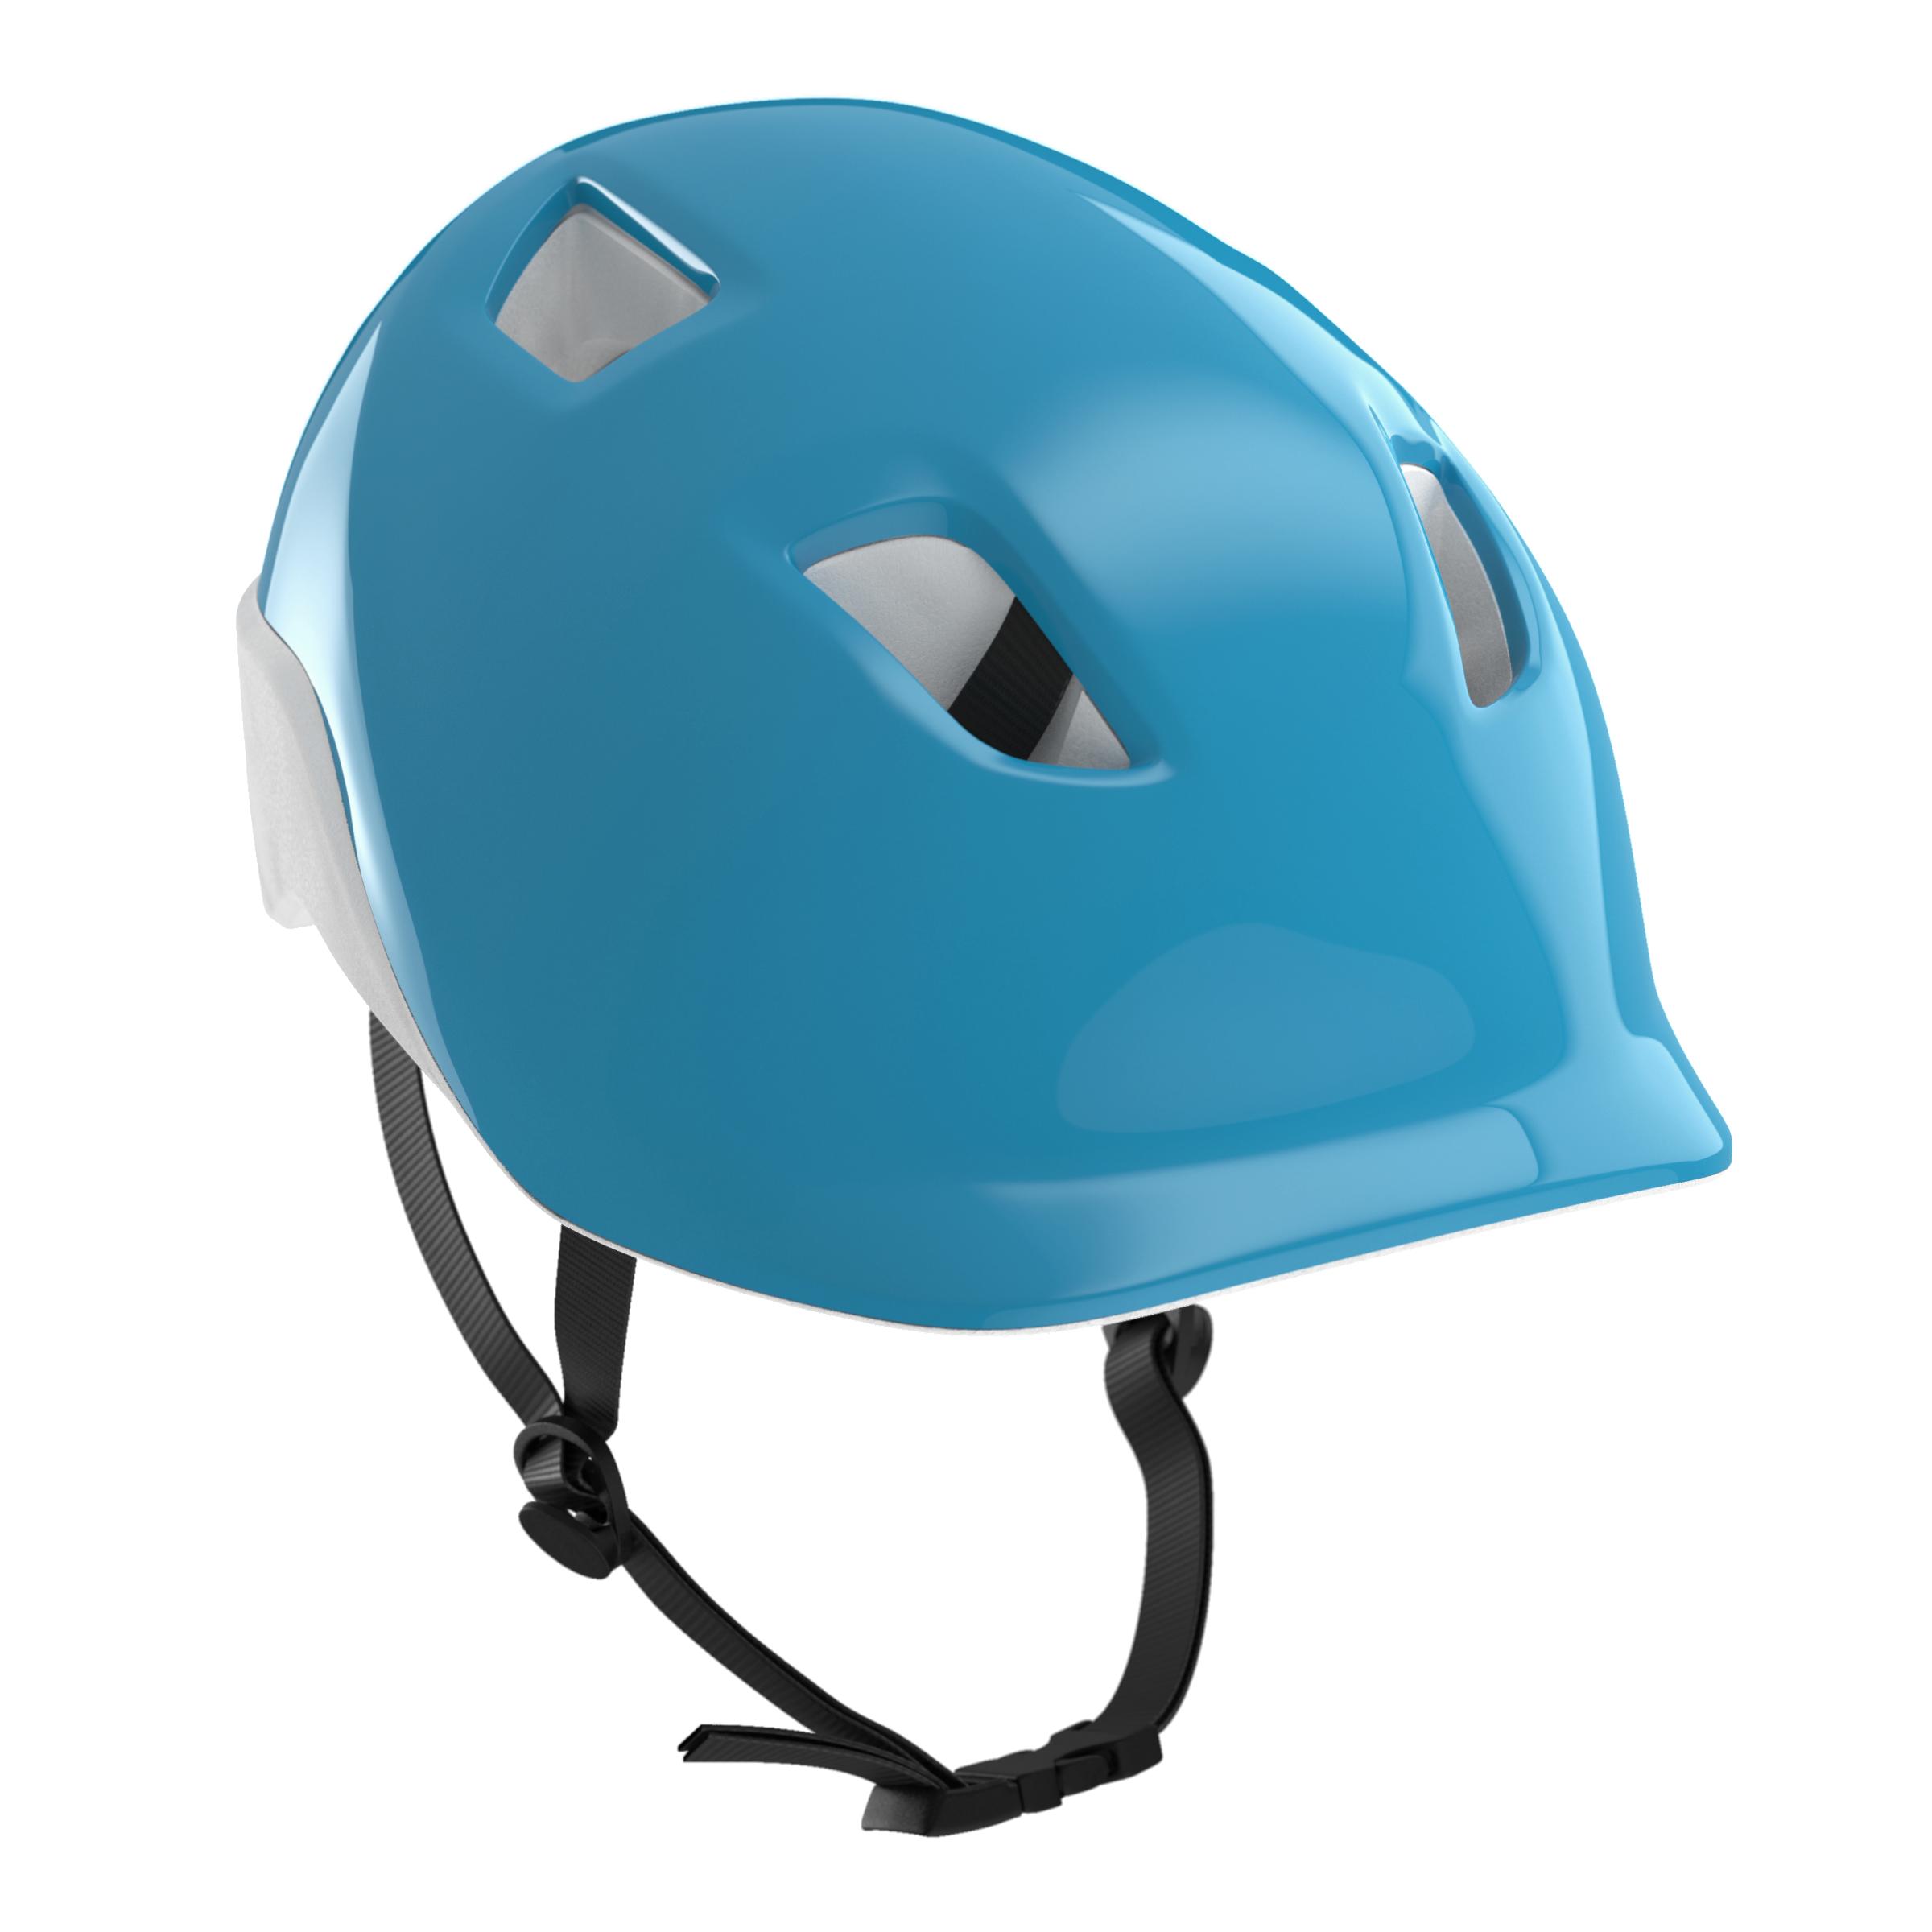 BTWIN 100 Kids' Cycling Helmet - Blue